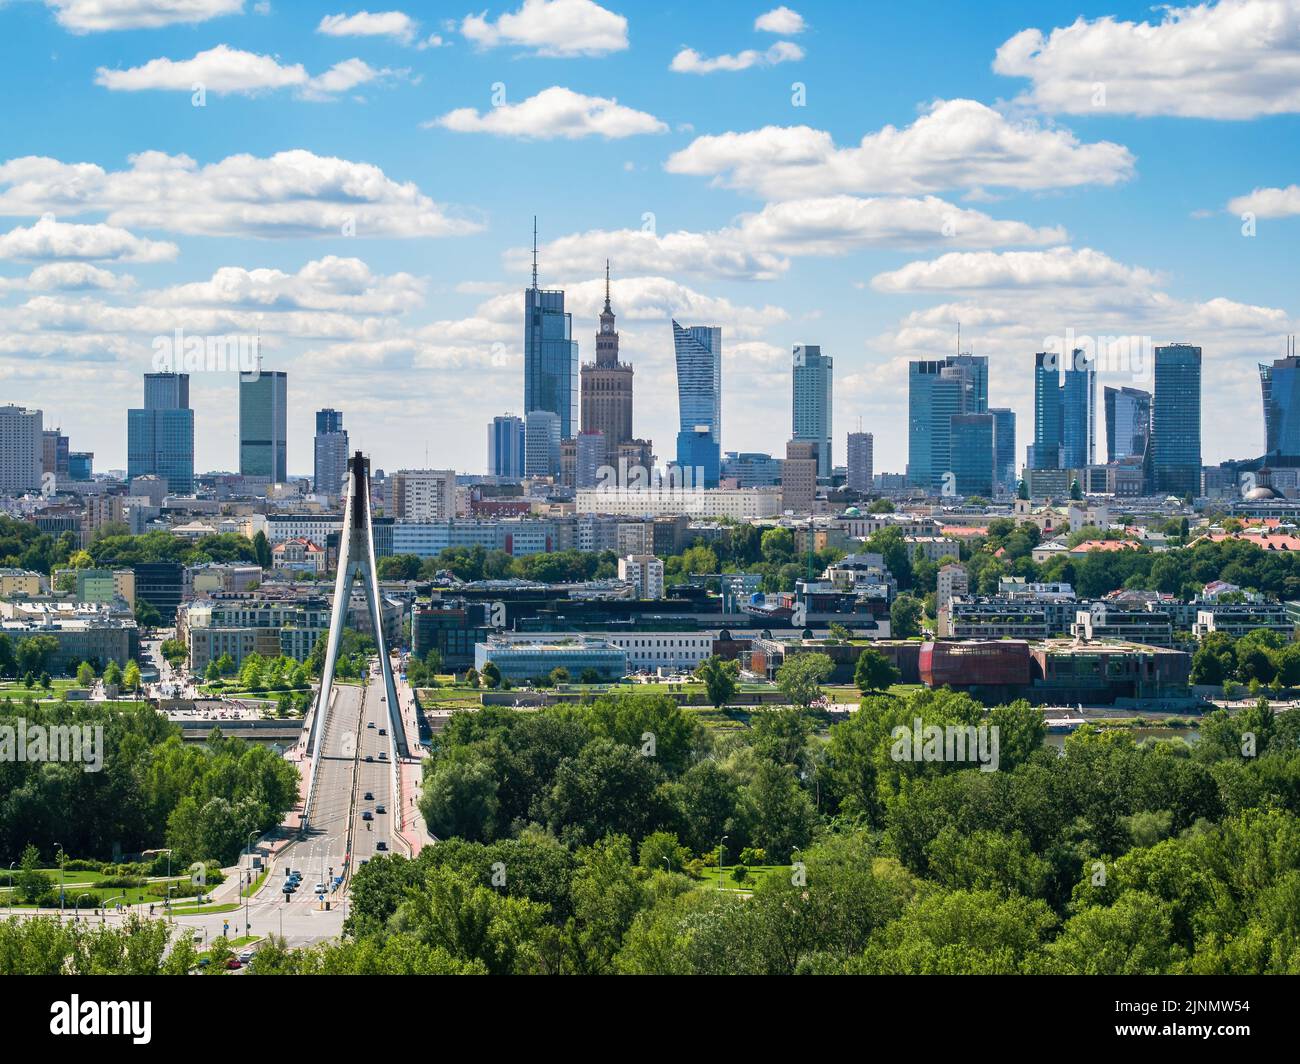 Swietokrzyski bridge and skyscrapers in city center, Warsaw aerial landscape under blue sky Stock Photo